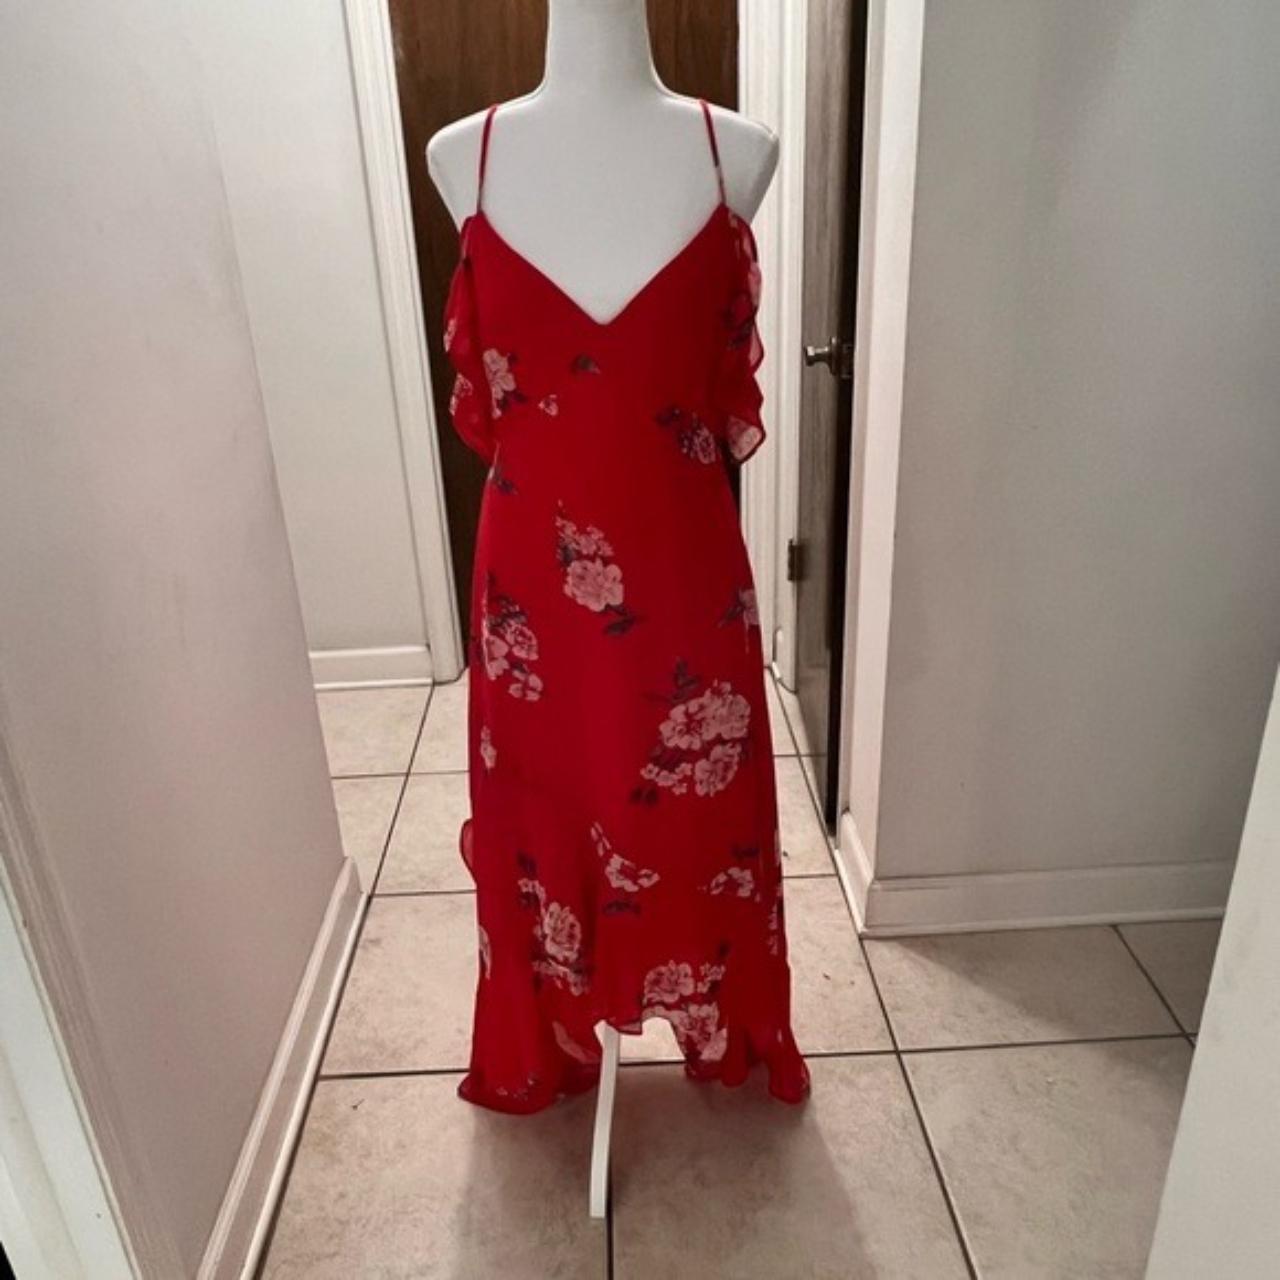 Nwt SPEECHLESS red floral summer maxi dress size... - Depop